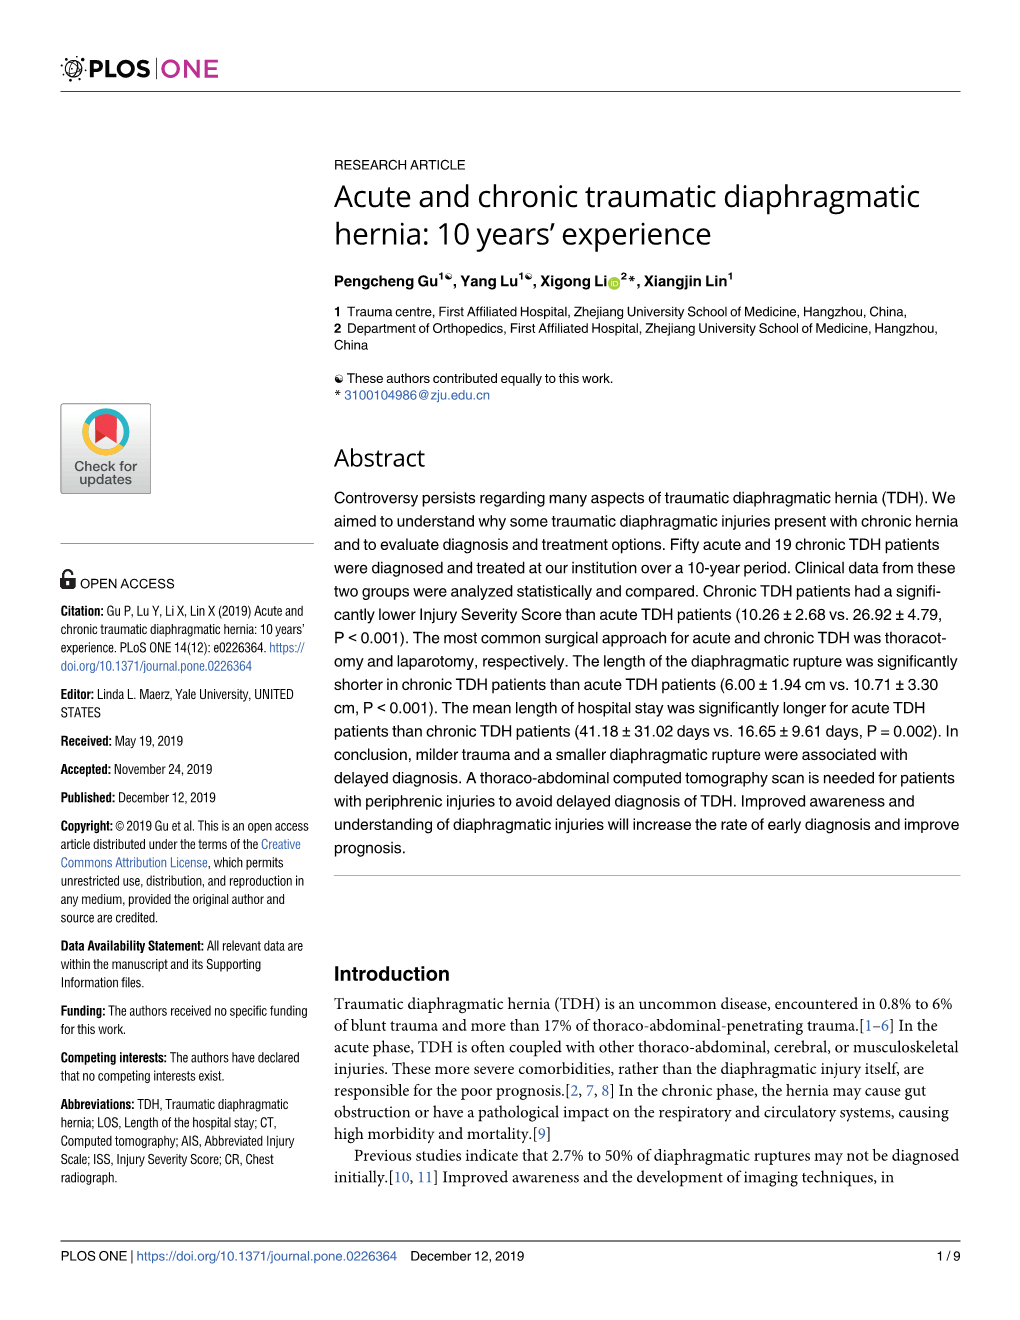 Acute and Chronic Traumatic Diaphragmatic Hernia: 10 Years’ Experience